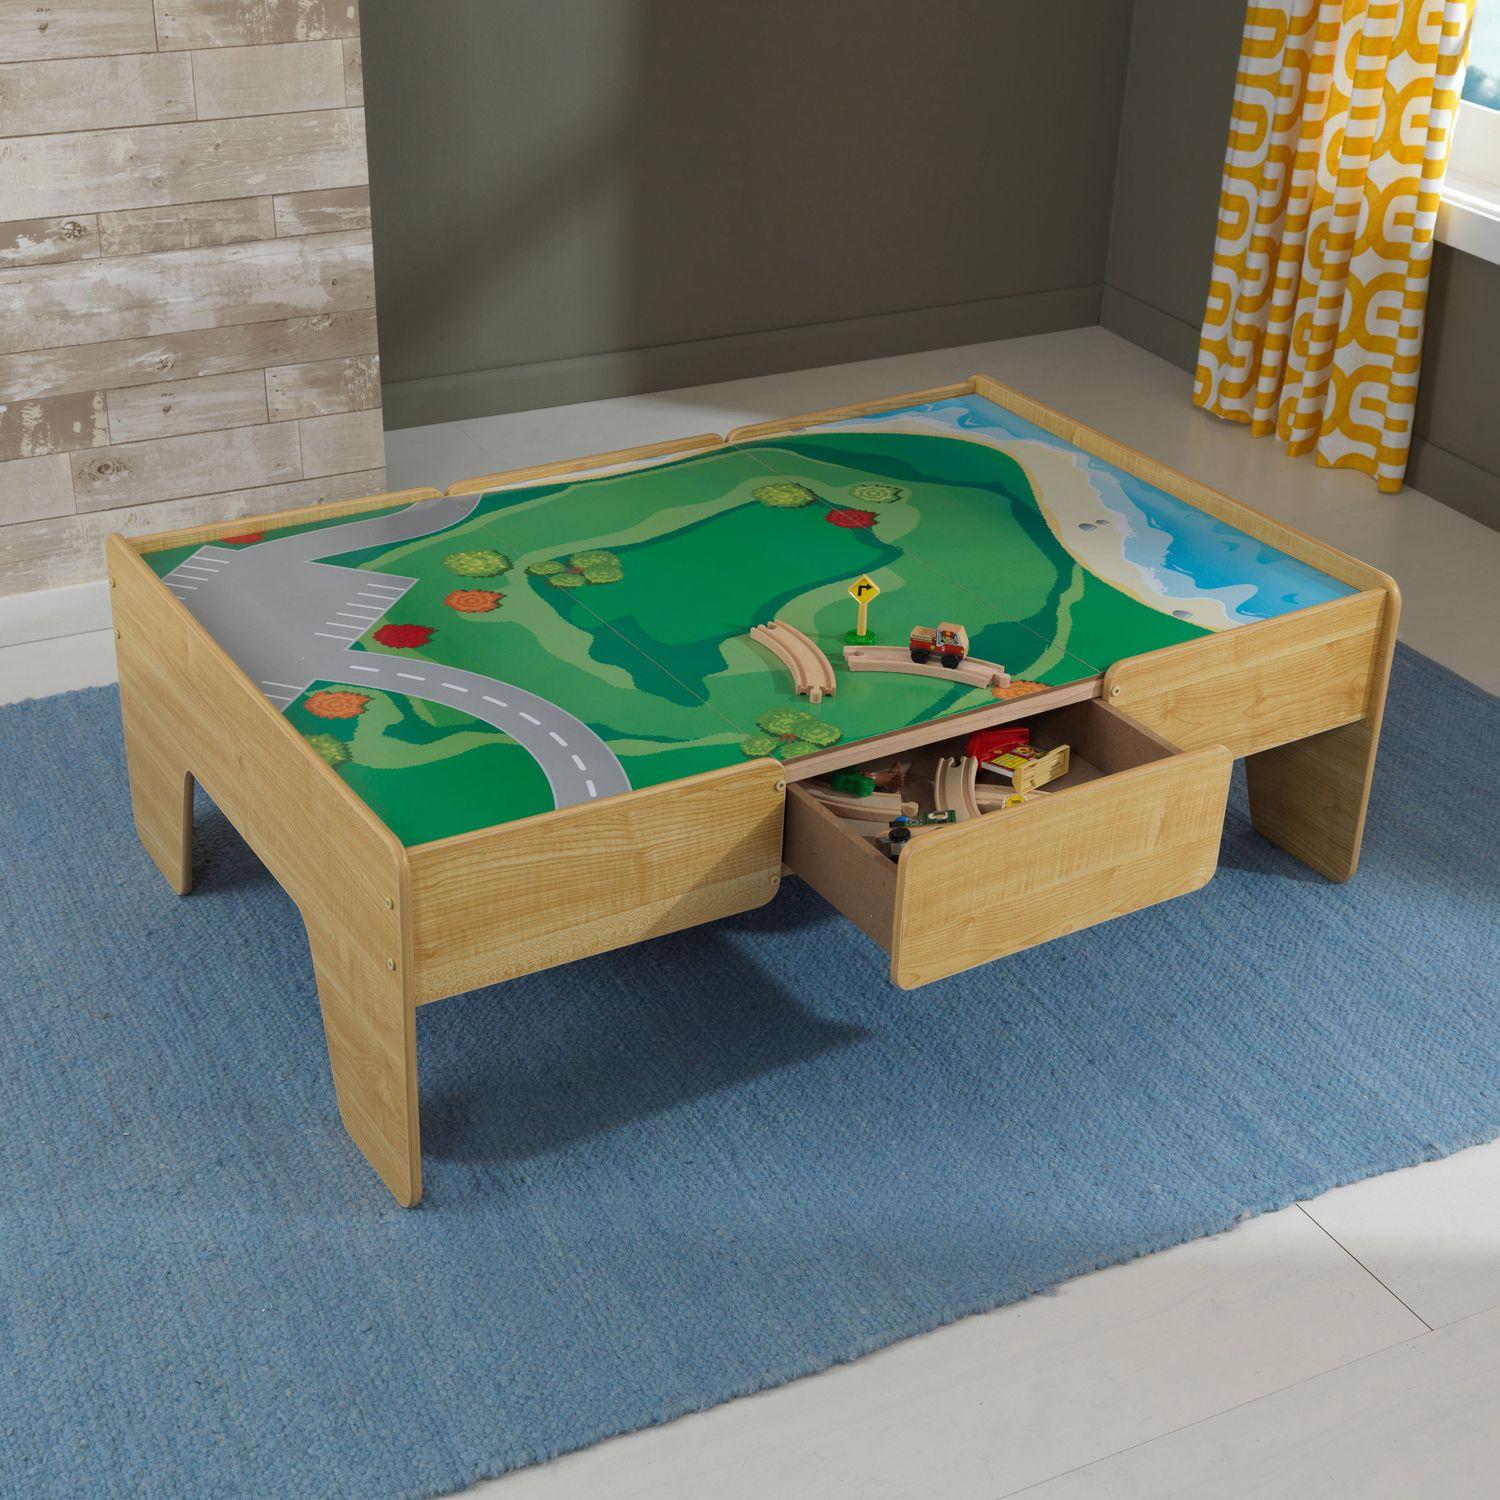 Kidkraft Play Table on Sale, 52% OFF | www.pegasusaerogroup.com